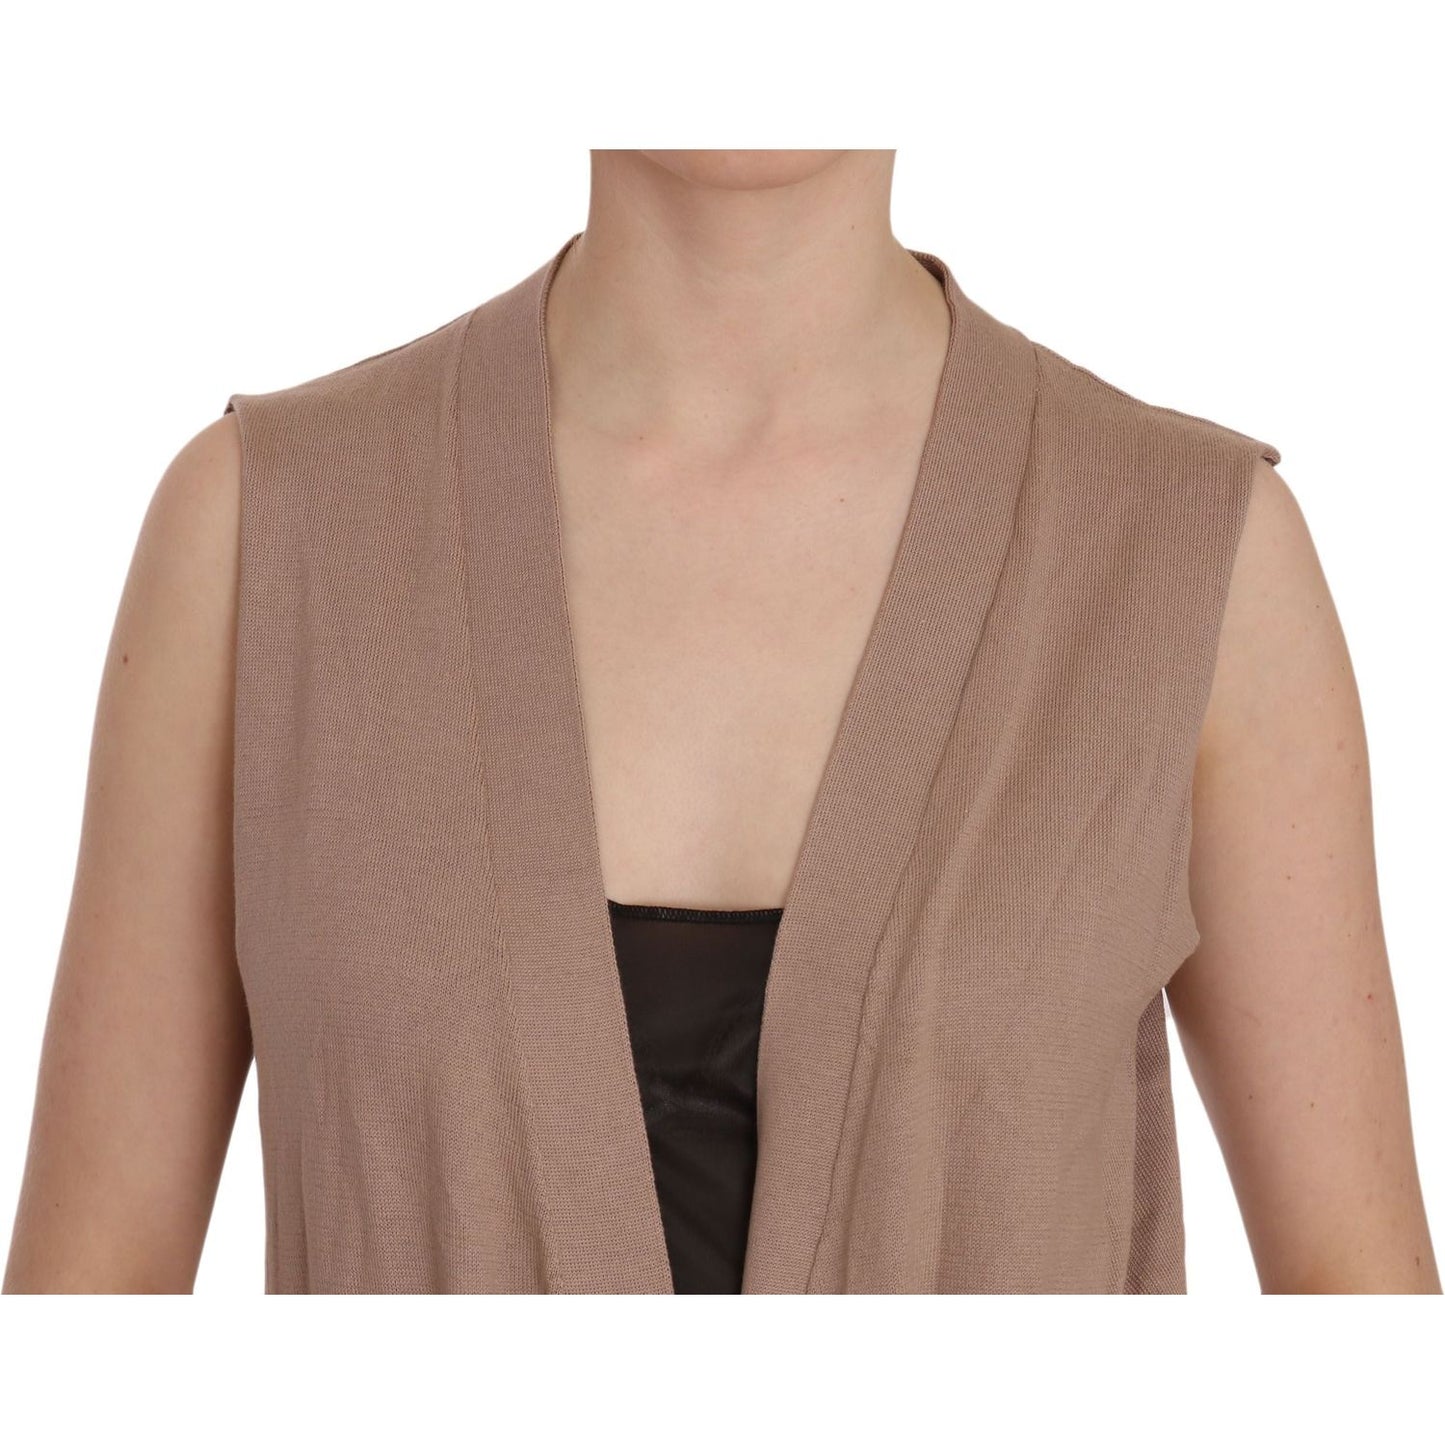 PINK MEMORIES Chic Sleeveless Cotton Cardigan Vest - Elegant Brown brown-100-cotton-sleeveless-cardigan-top-vest-3 IMG_1945-769fcdd4-b1a.jpg